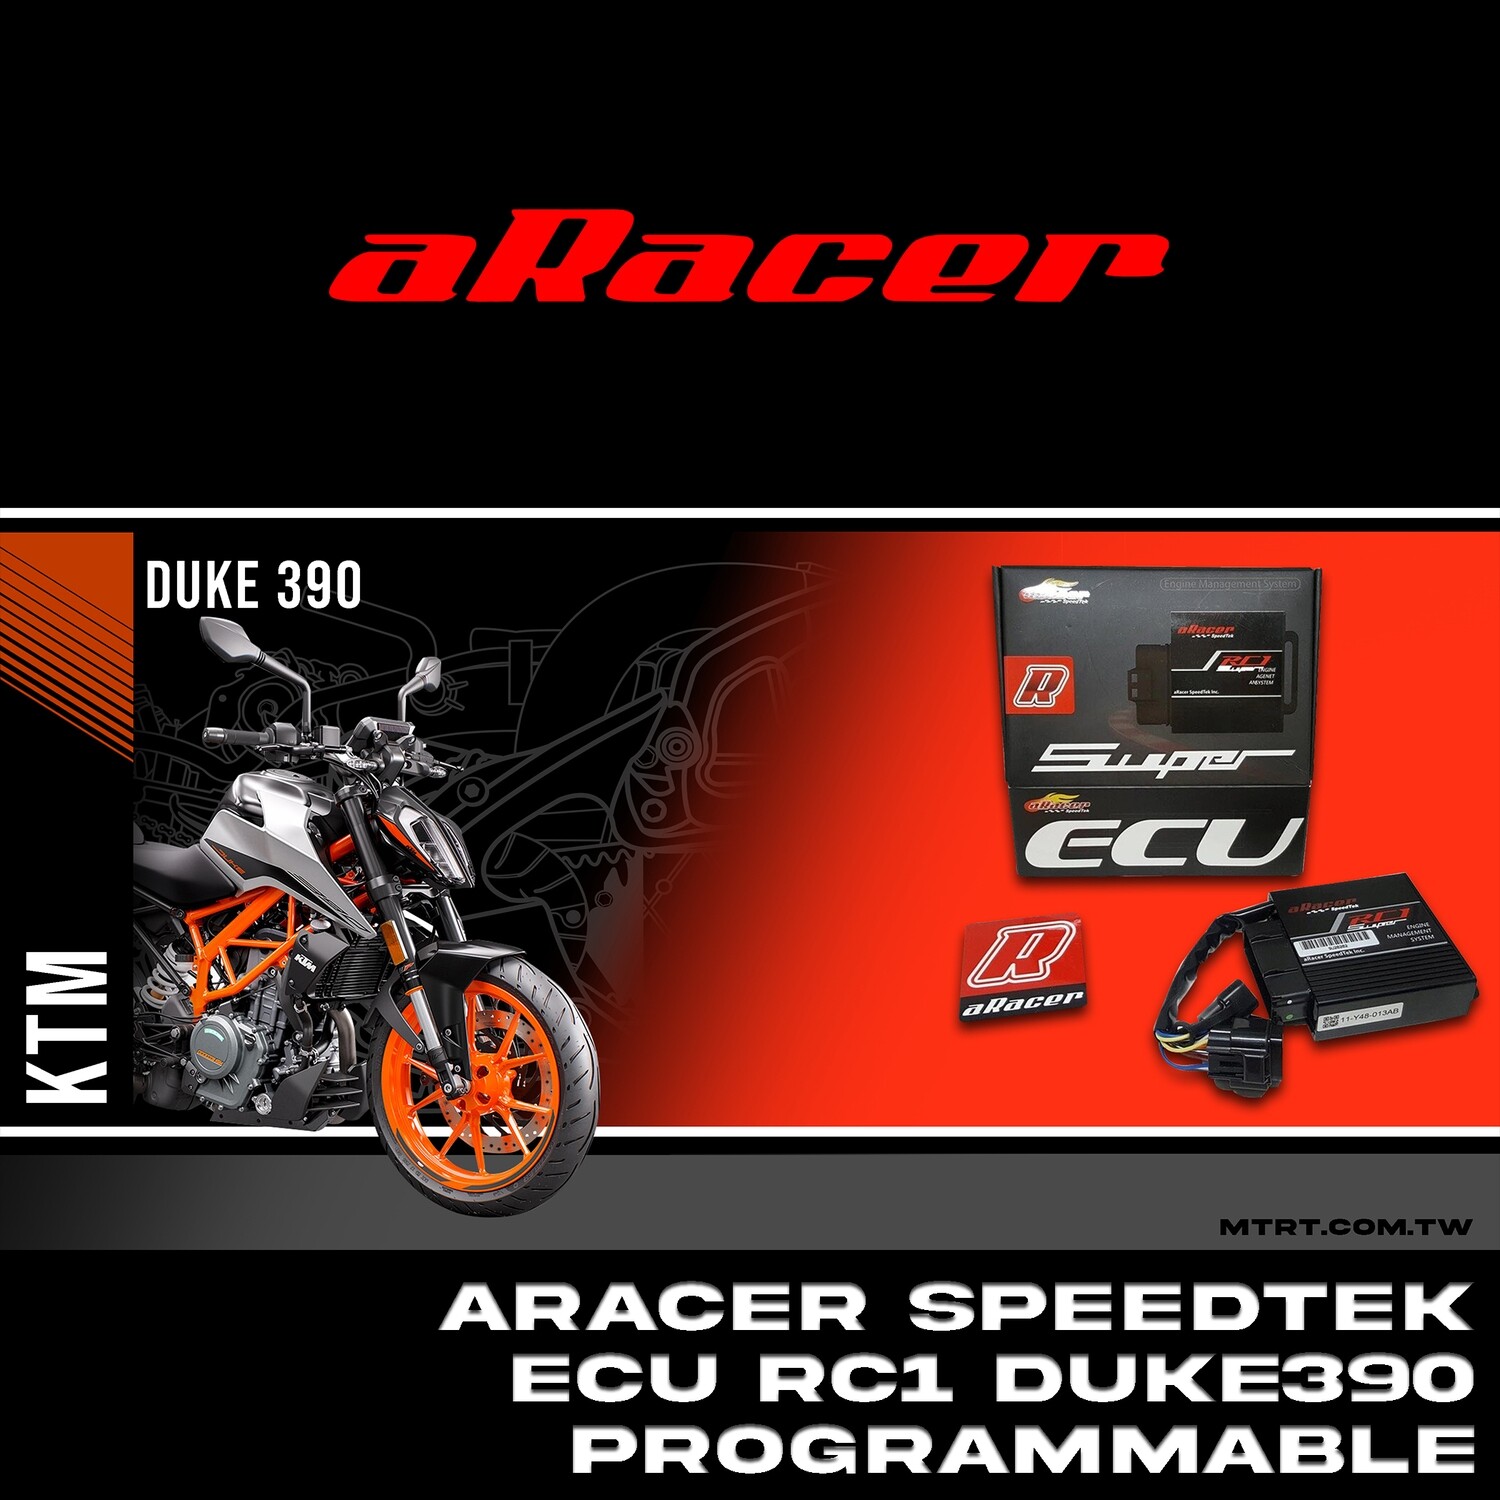 ARACER SPEEDTEK ECU RC1 SUPER PROGRAMMABLE (DUKE 390)